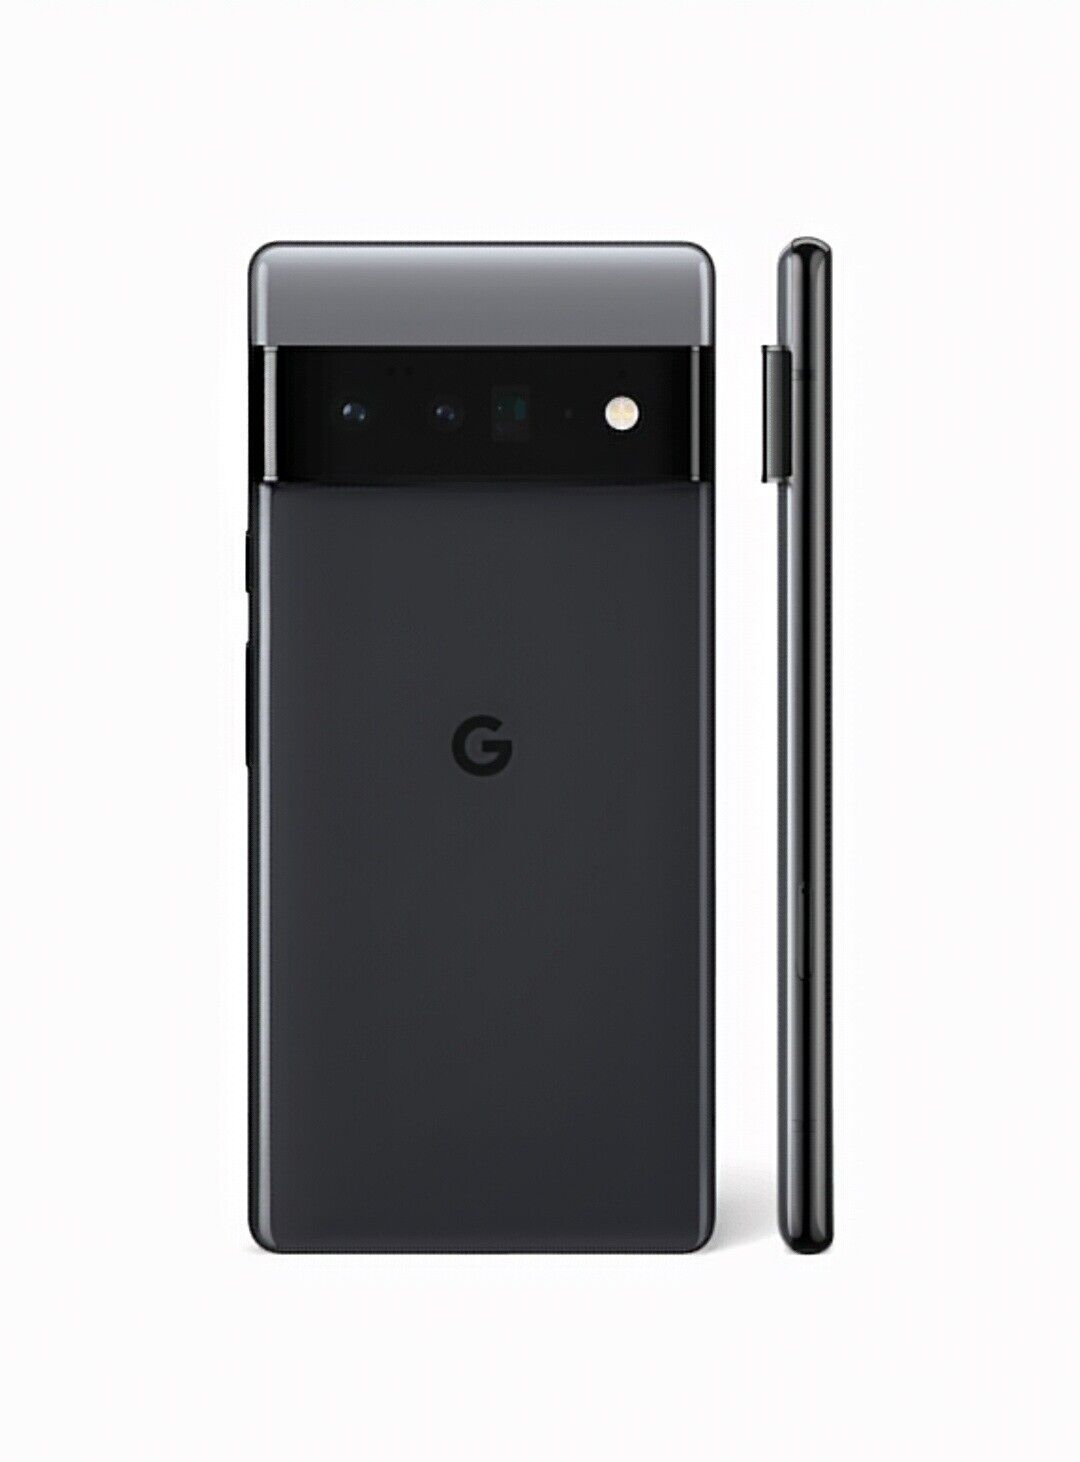 The Price of Google Pixel 6 Pro (128GB/12GB) | Google Pixel Phone